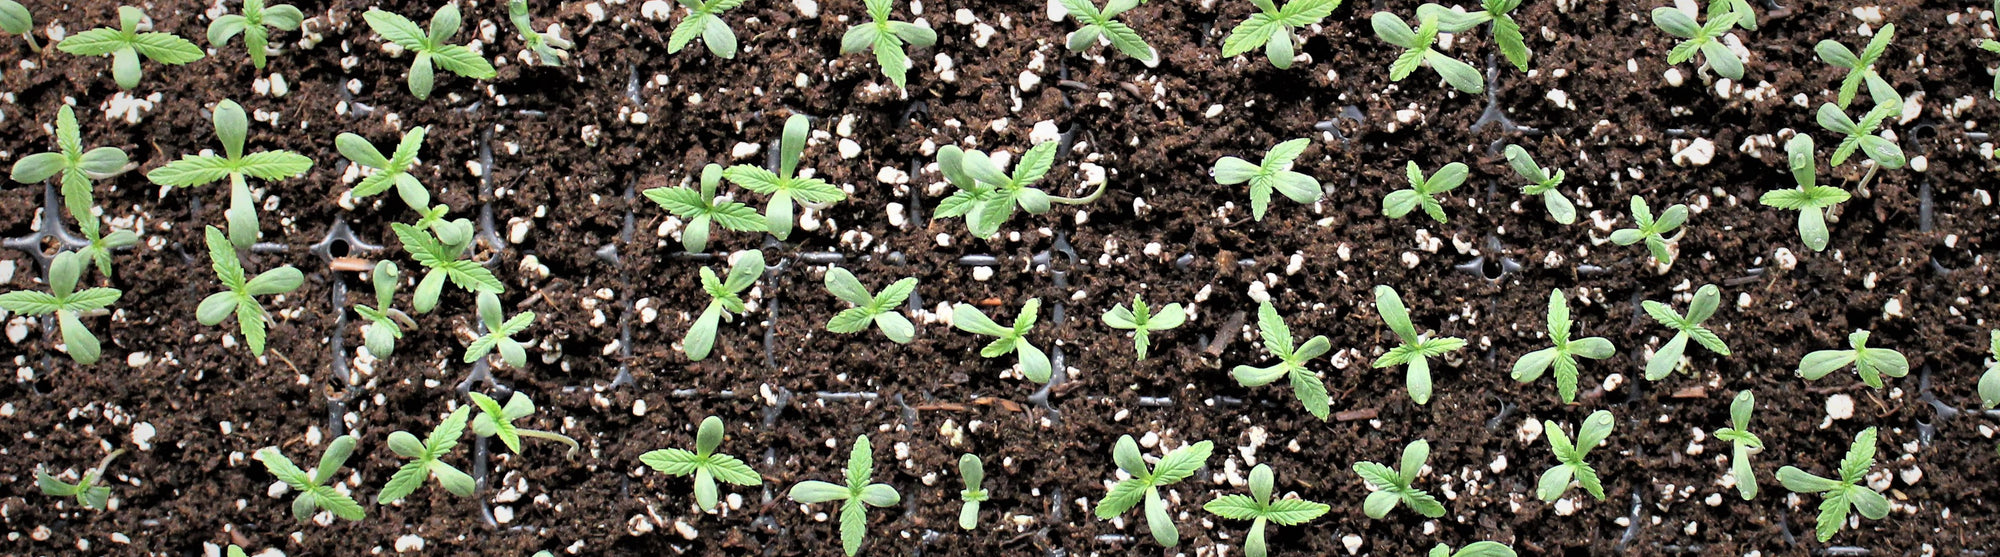 Seeds vs Clones – Where to “Start”